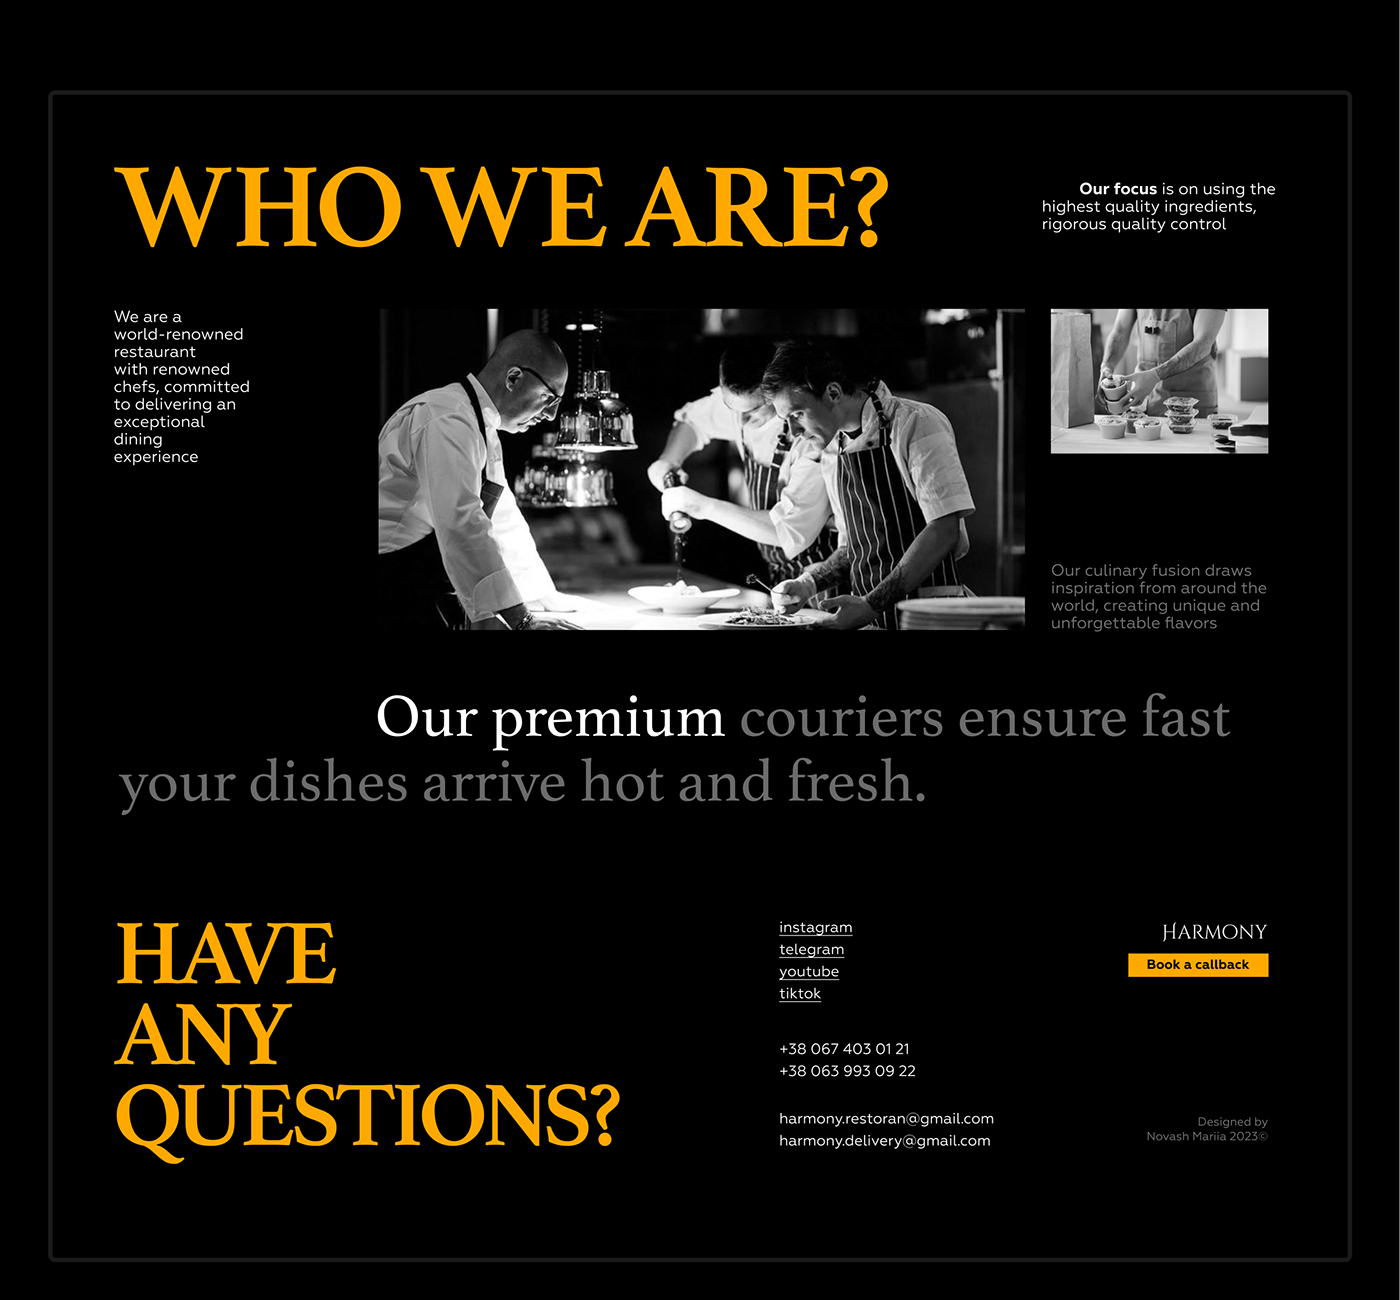 restaurant tasty dishes delivery Minimalism design landing page chef kitchen